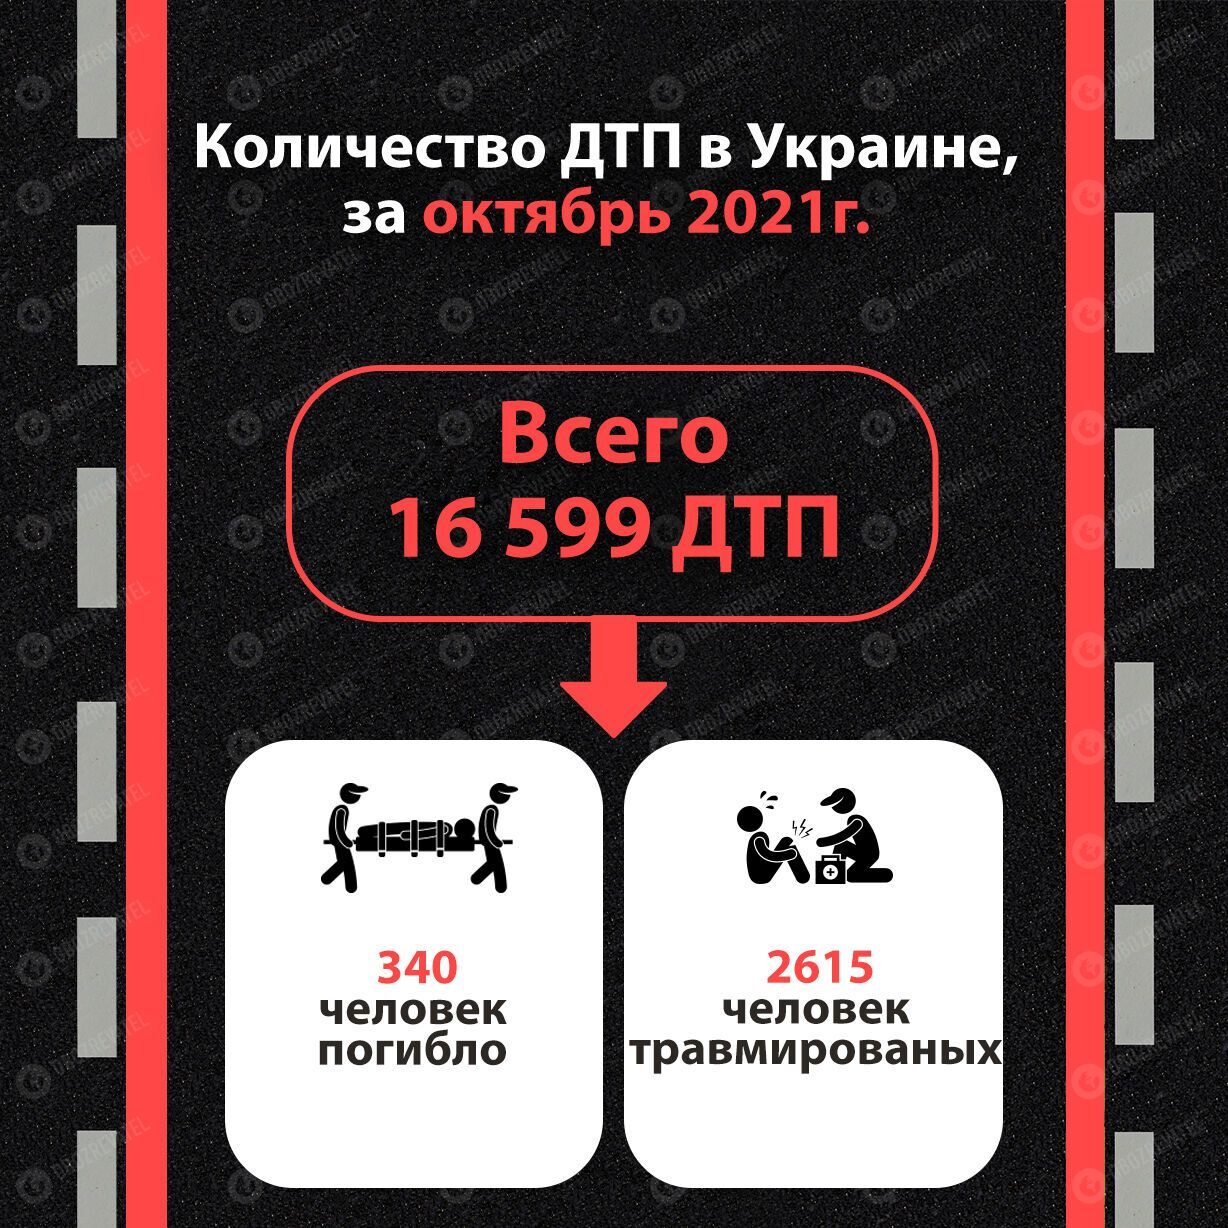 Статистика по ДТП в Украине за октябрь-2021